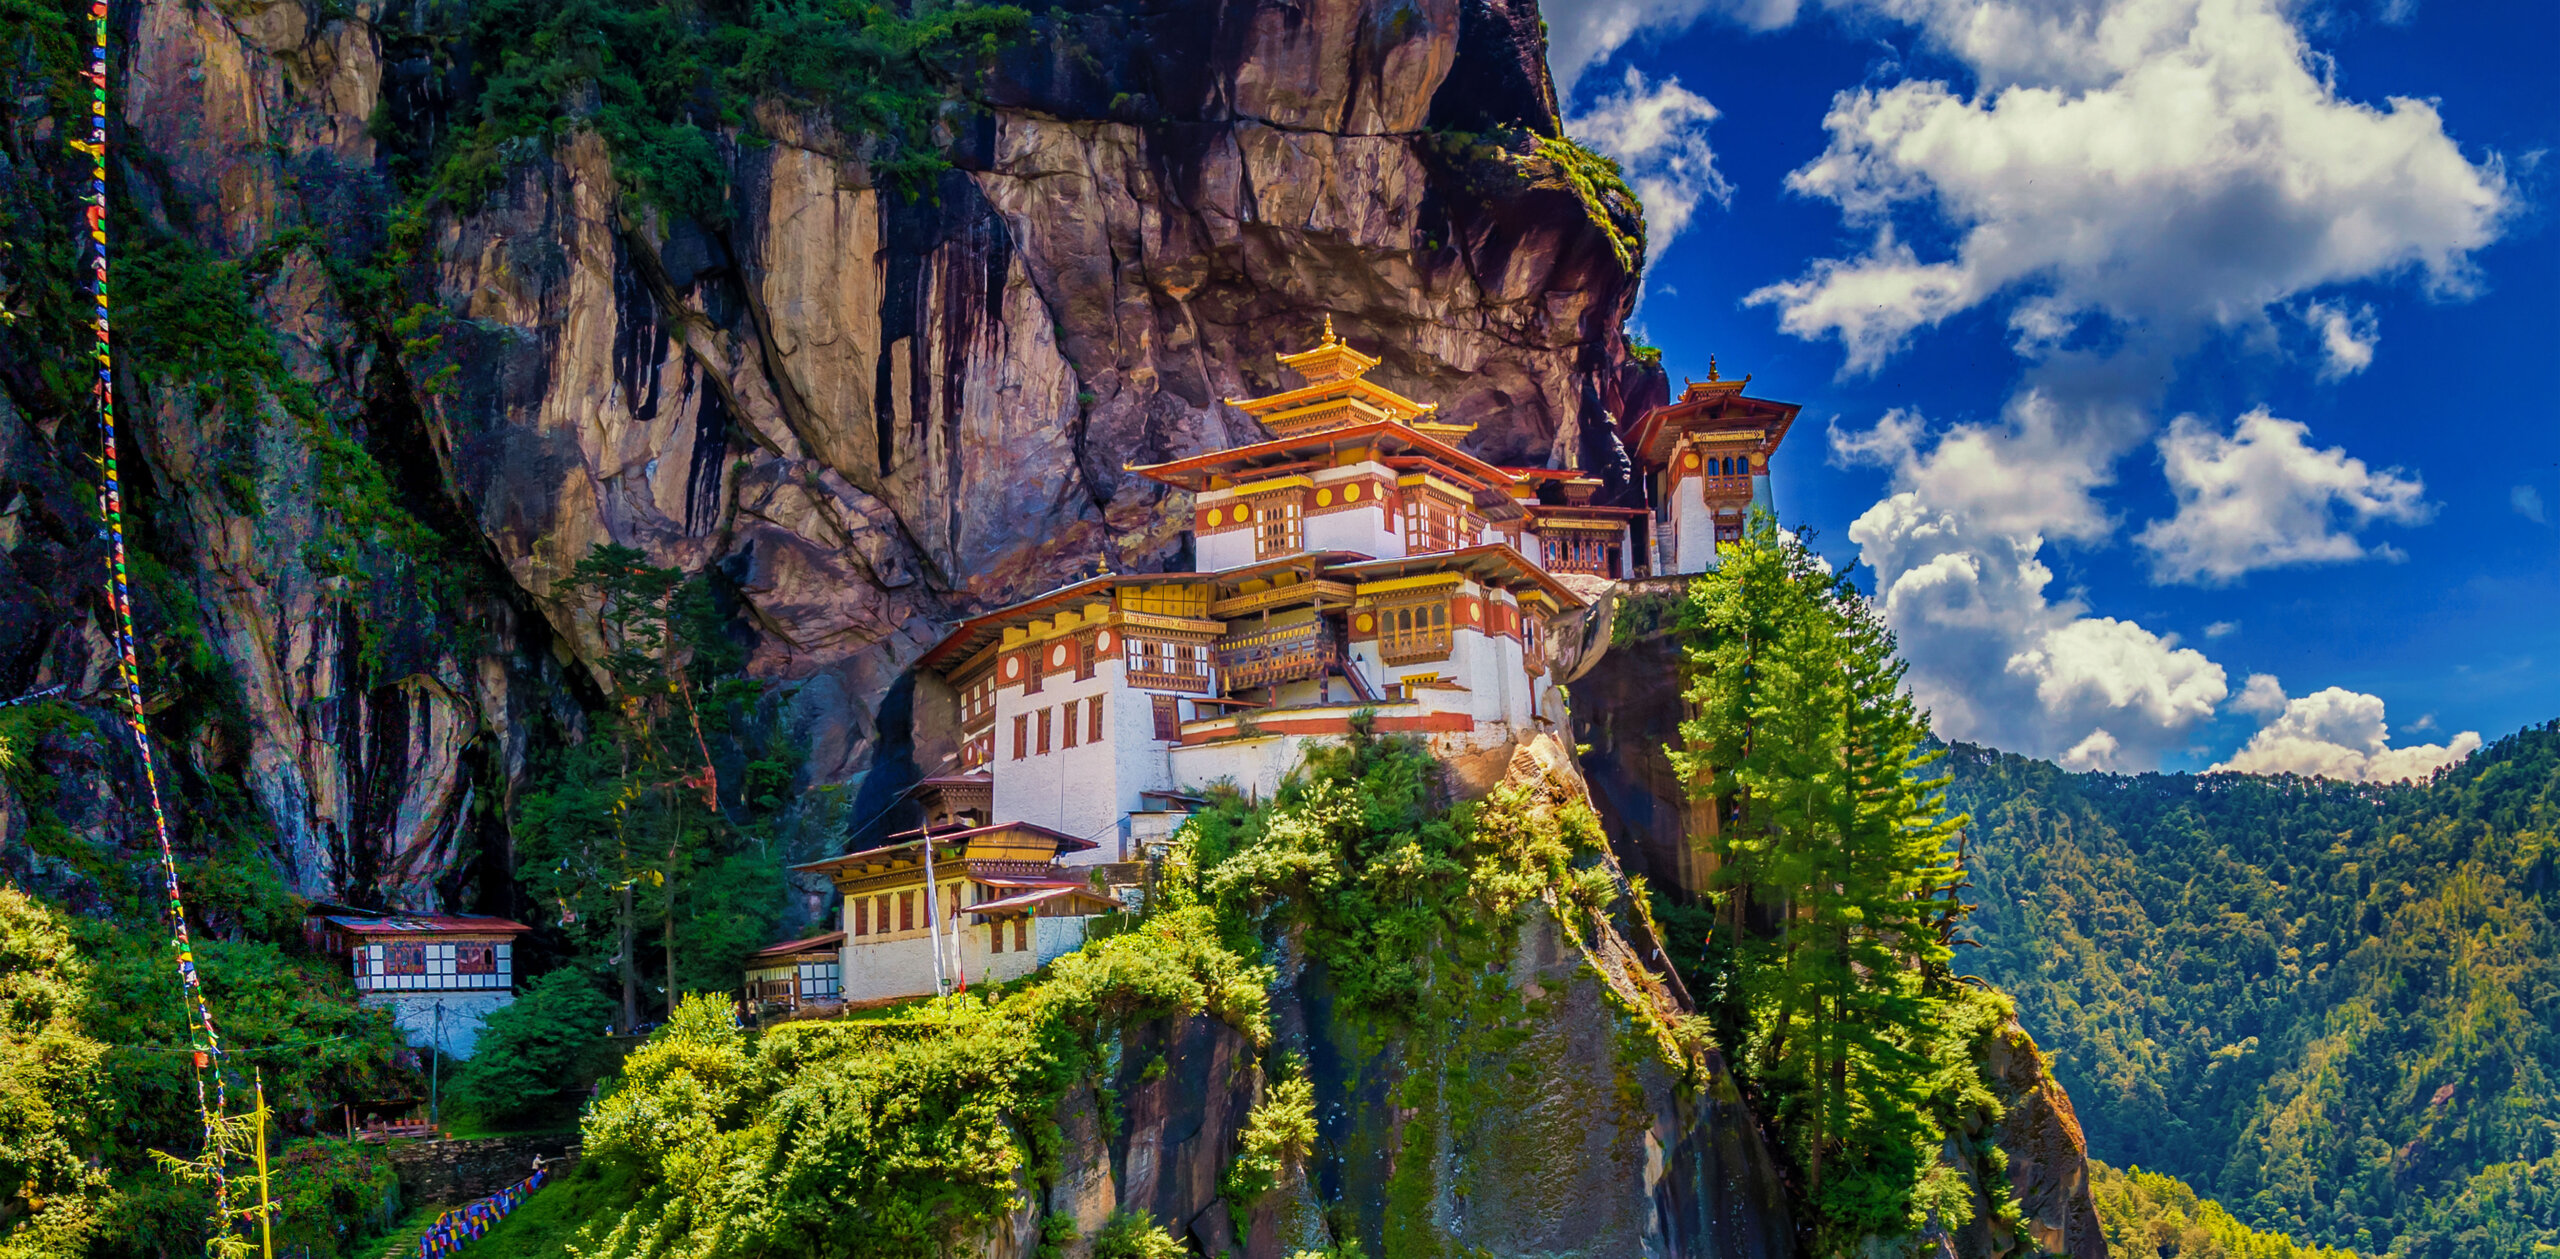 Bhutan Hiking & Festival Tour  Active Trip to a Tsechu Festival